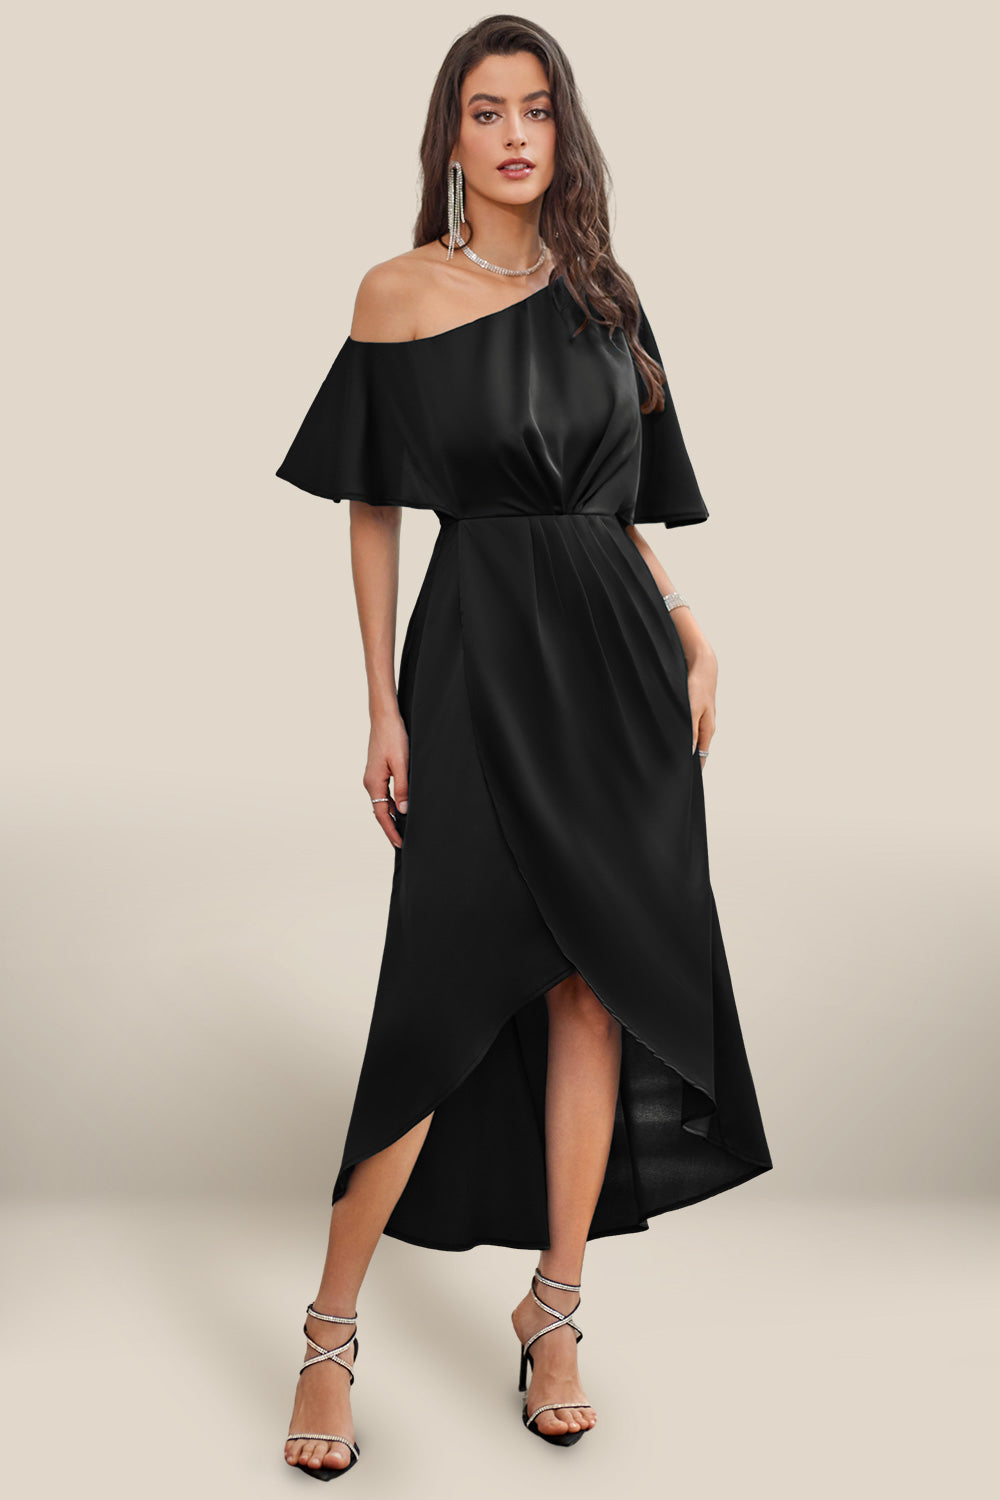 GK Women Wrap Hem Party Dress 1/2 Sleeve One-Shoulder Elastic Waist A-Line Dress